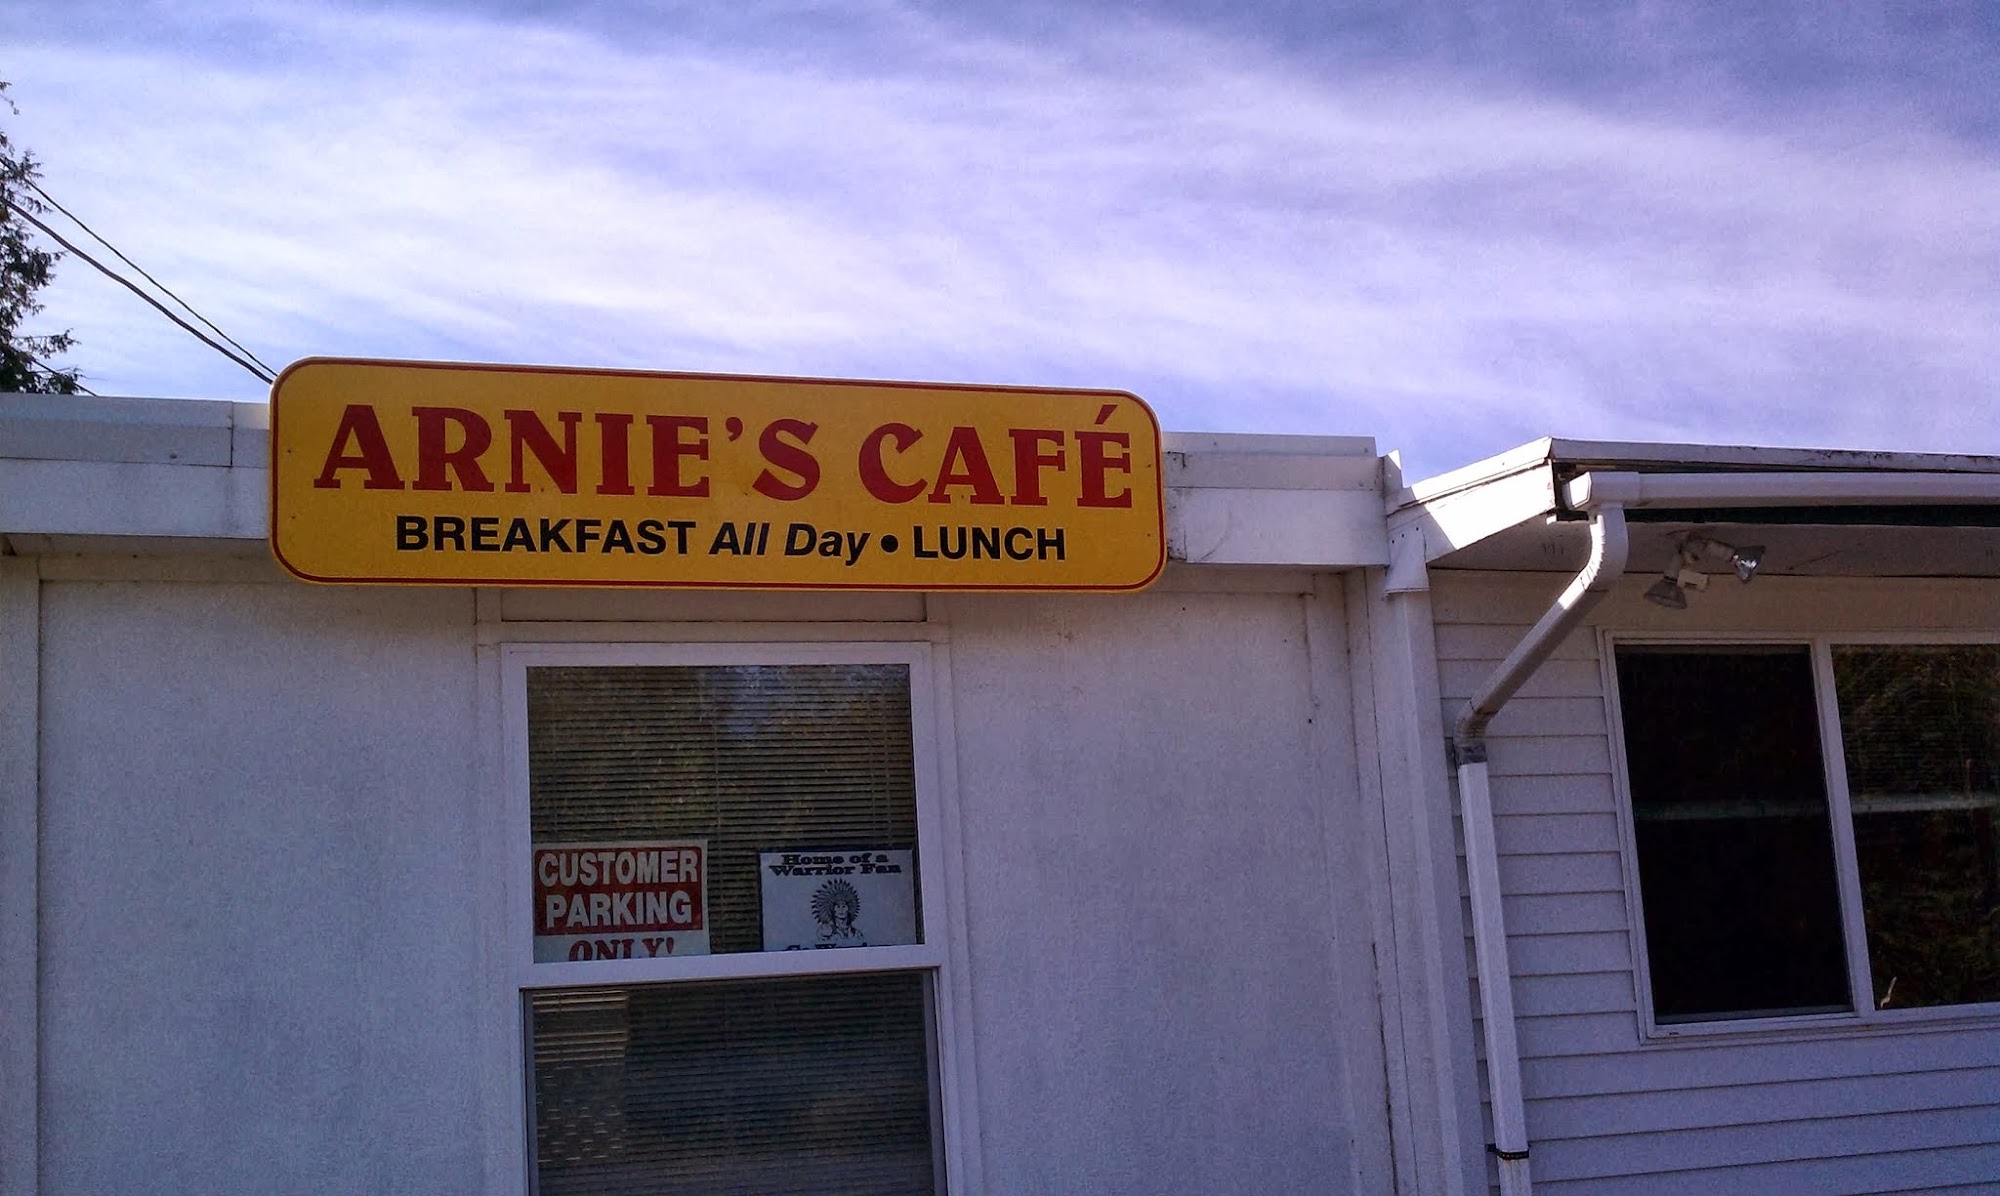 Arnie's Cafe